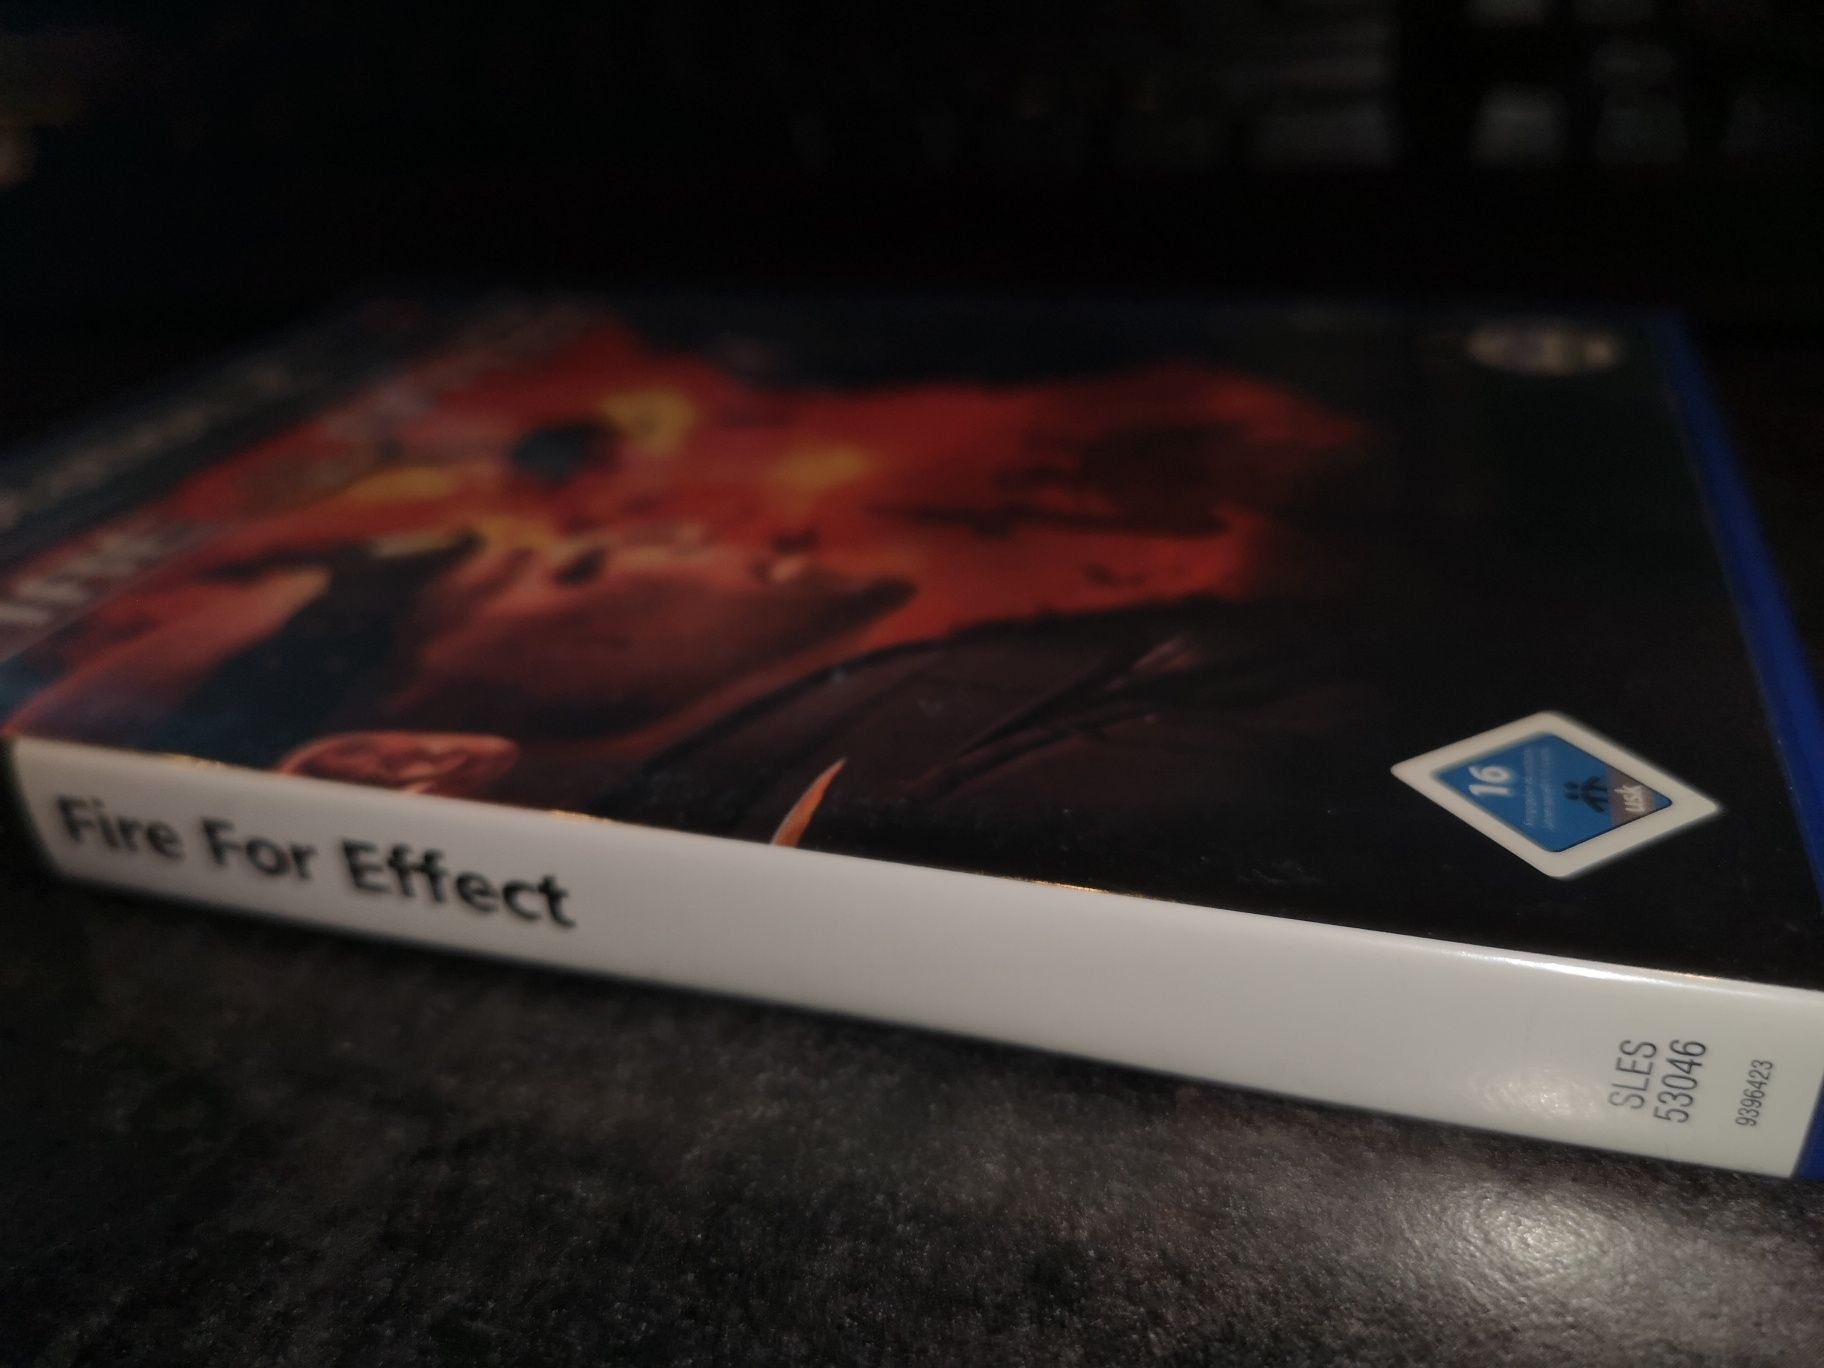 Fire for Effect PS2 gra ANG (stan bdb+) kioskzgrami gwarancja